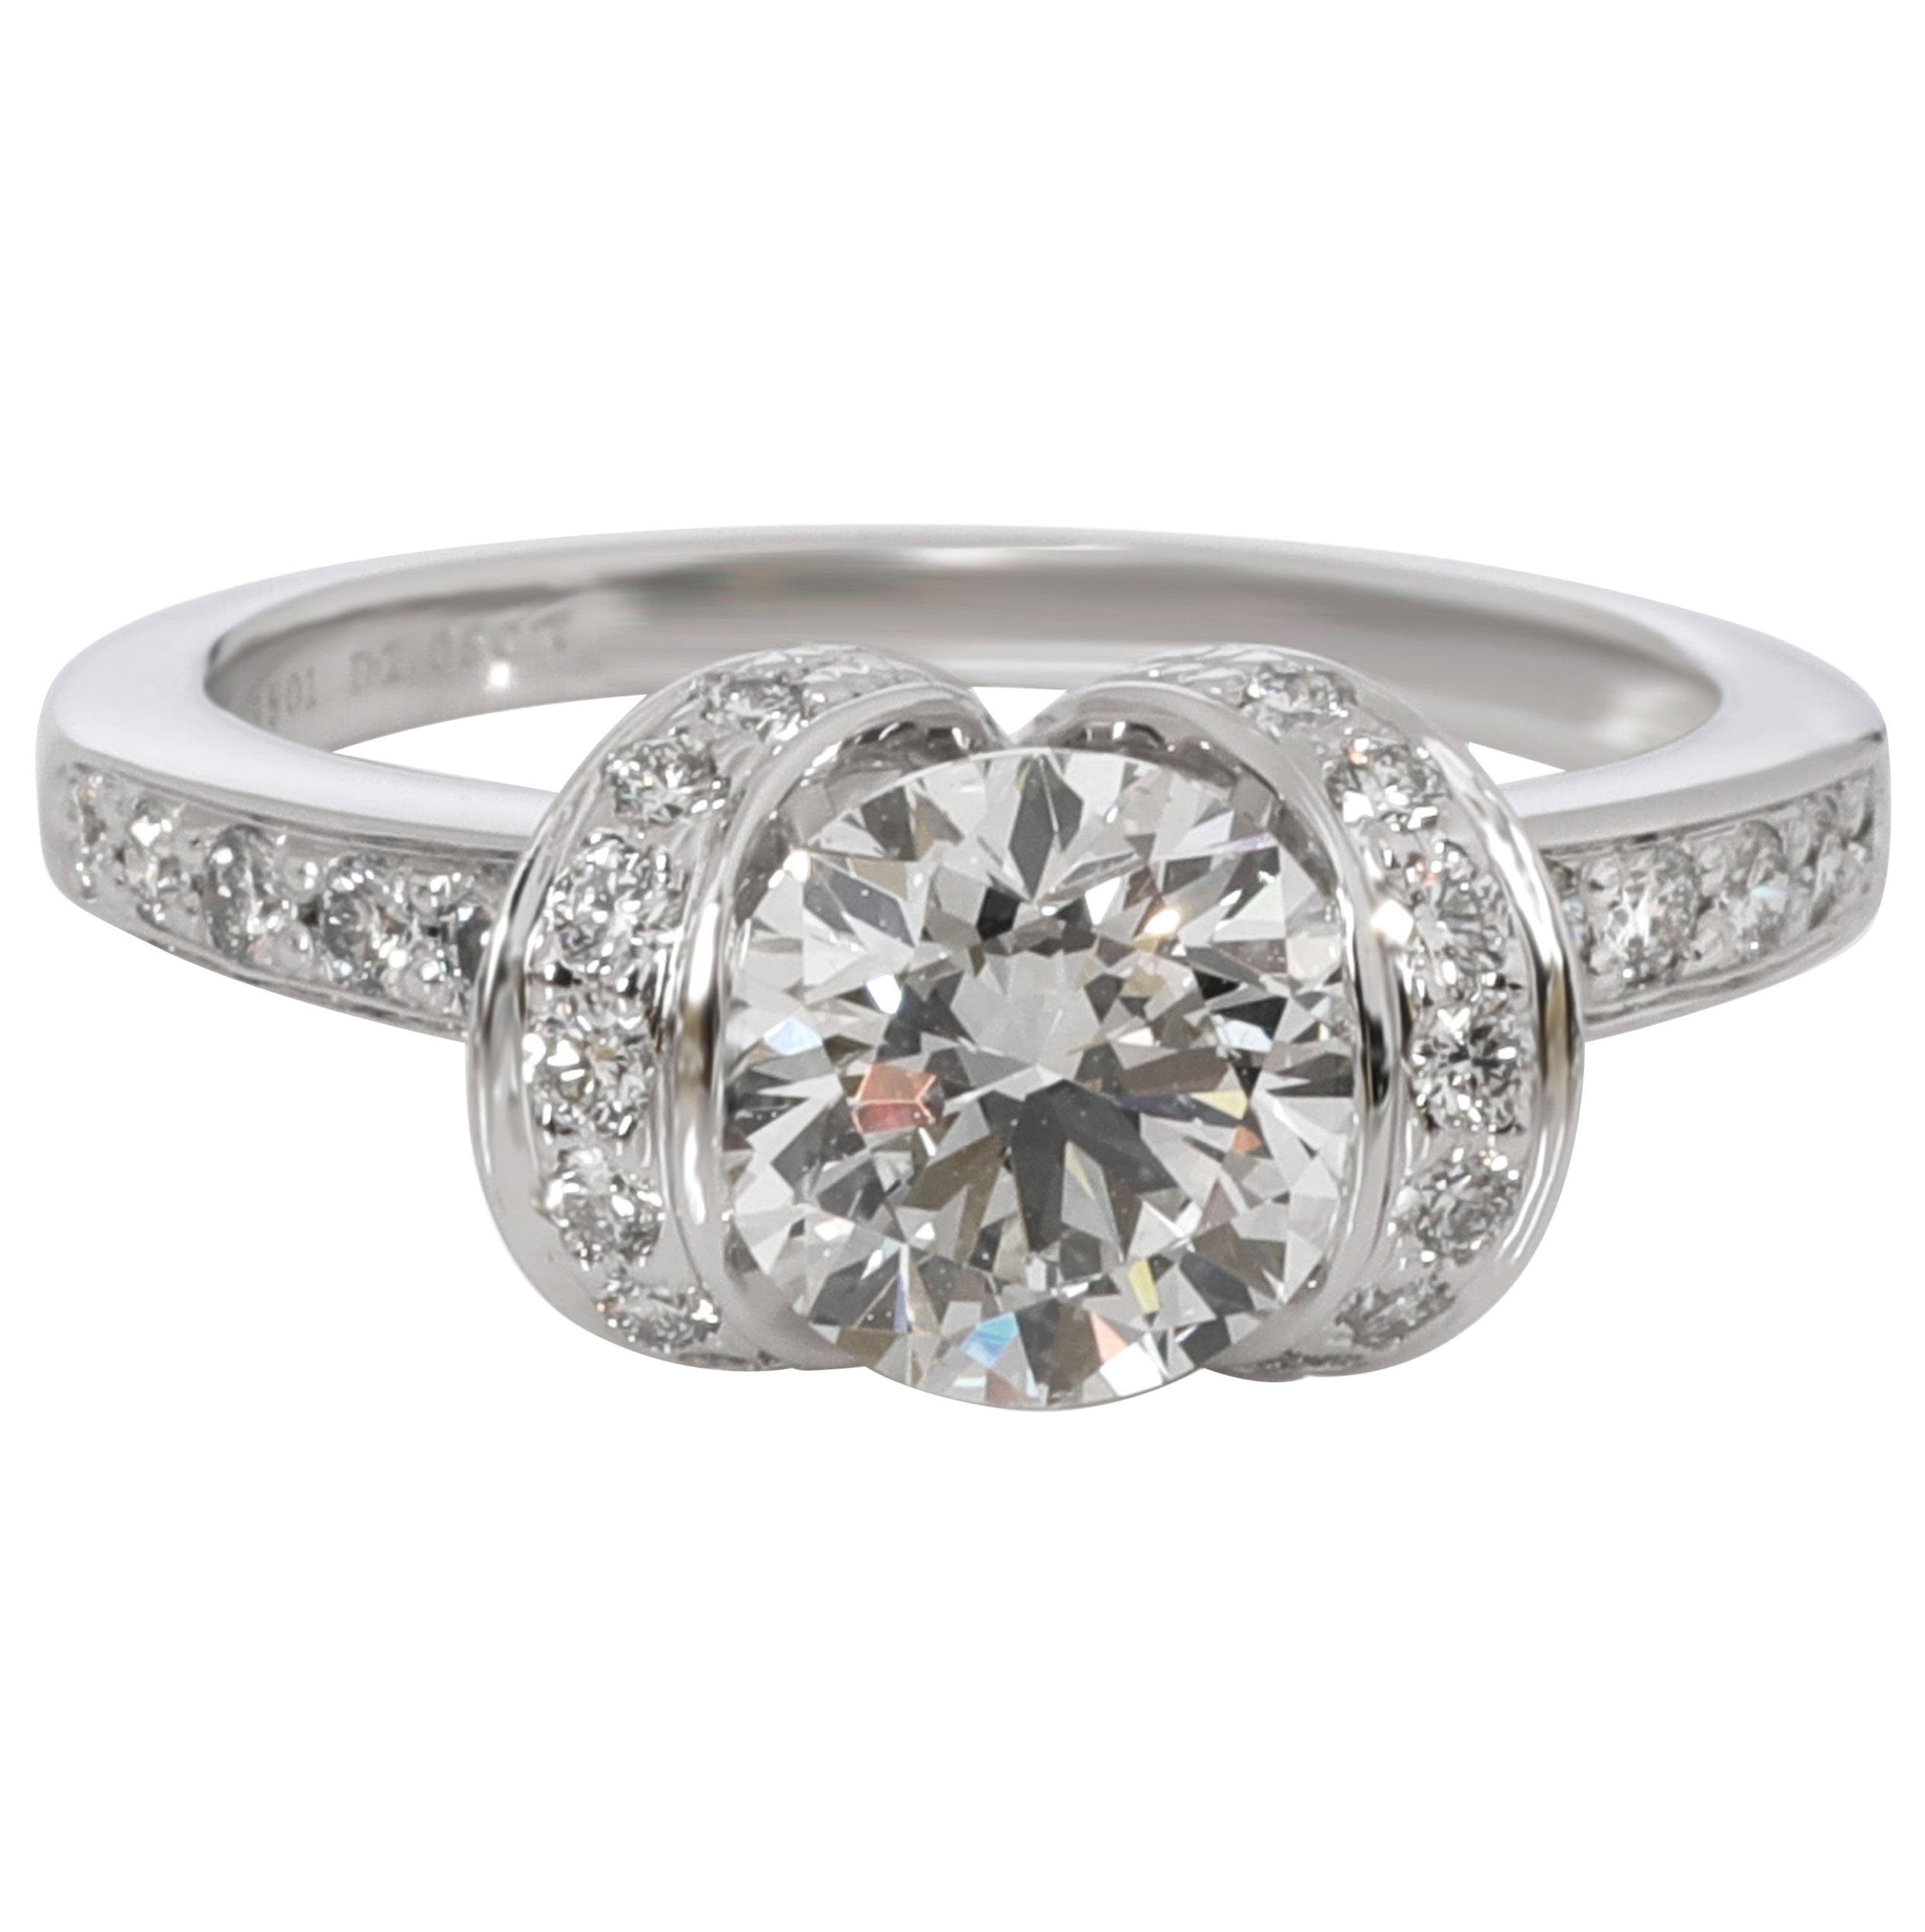 Tiffany & Co. Ribbon Diamond Engagement Ring in Platinum H VS1 1.32 Carat